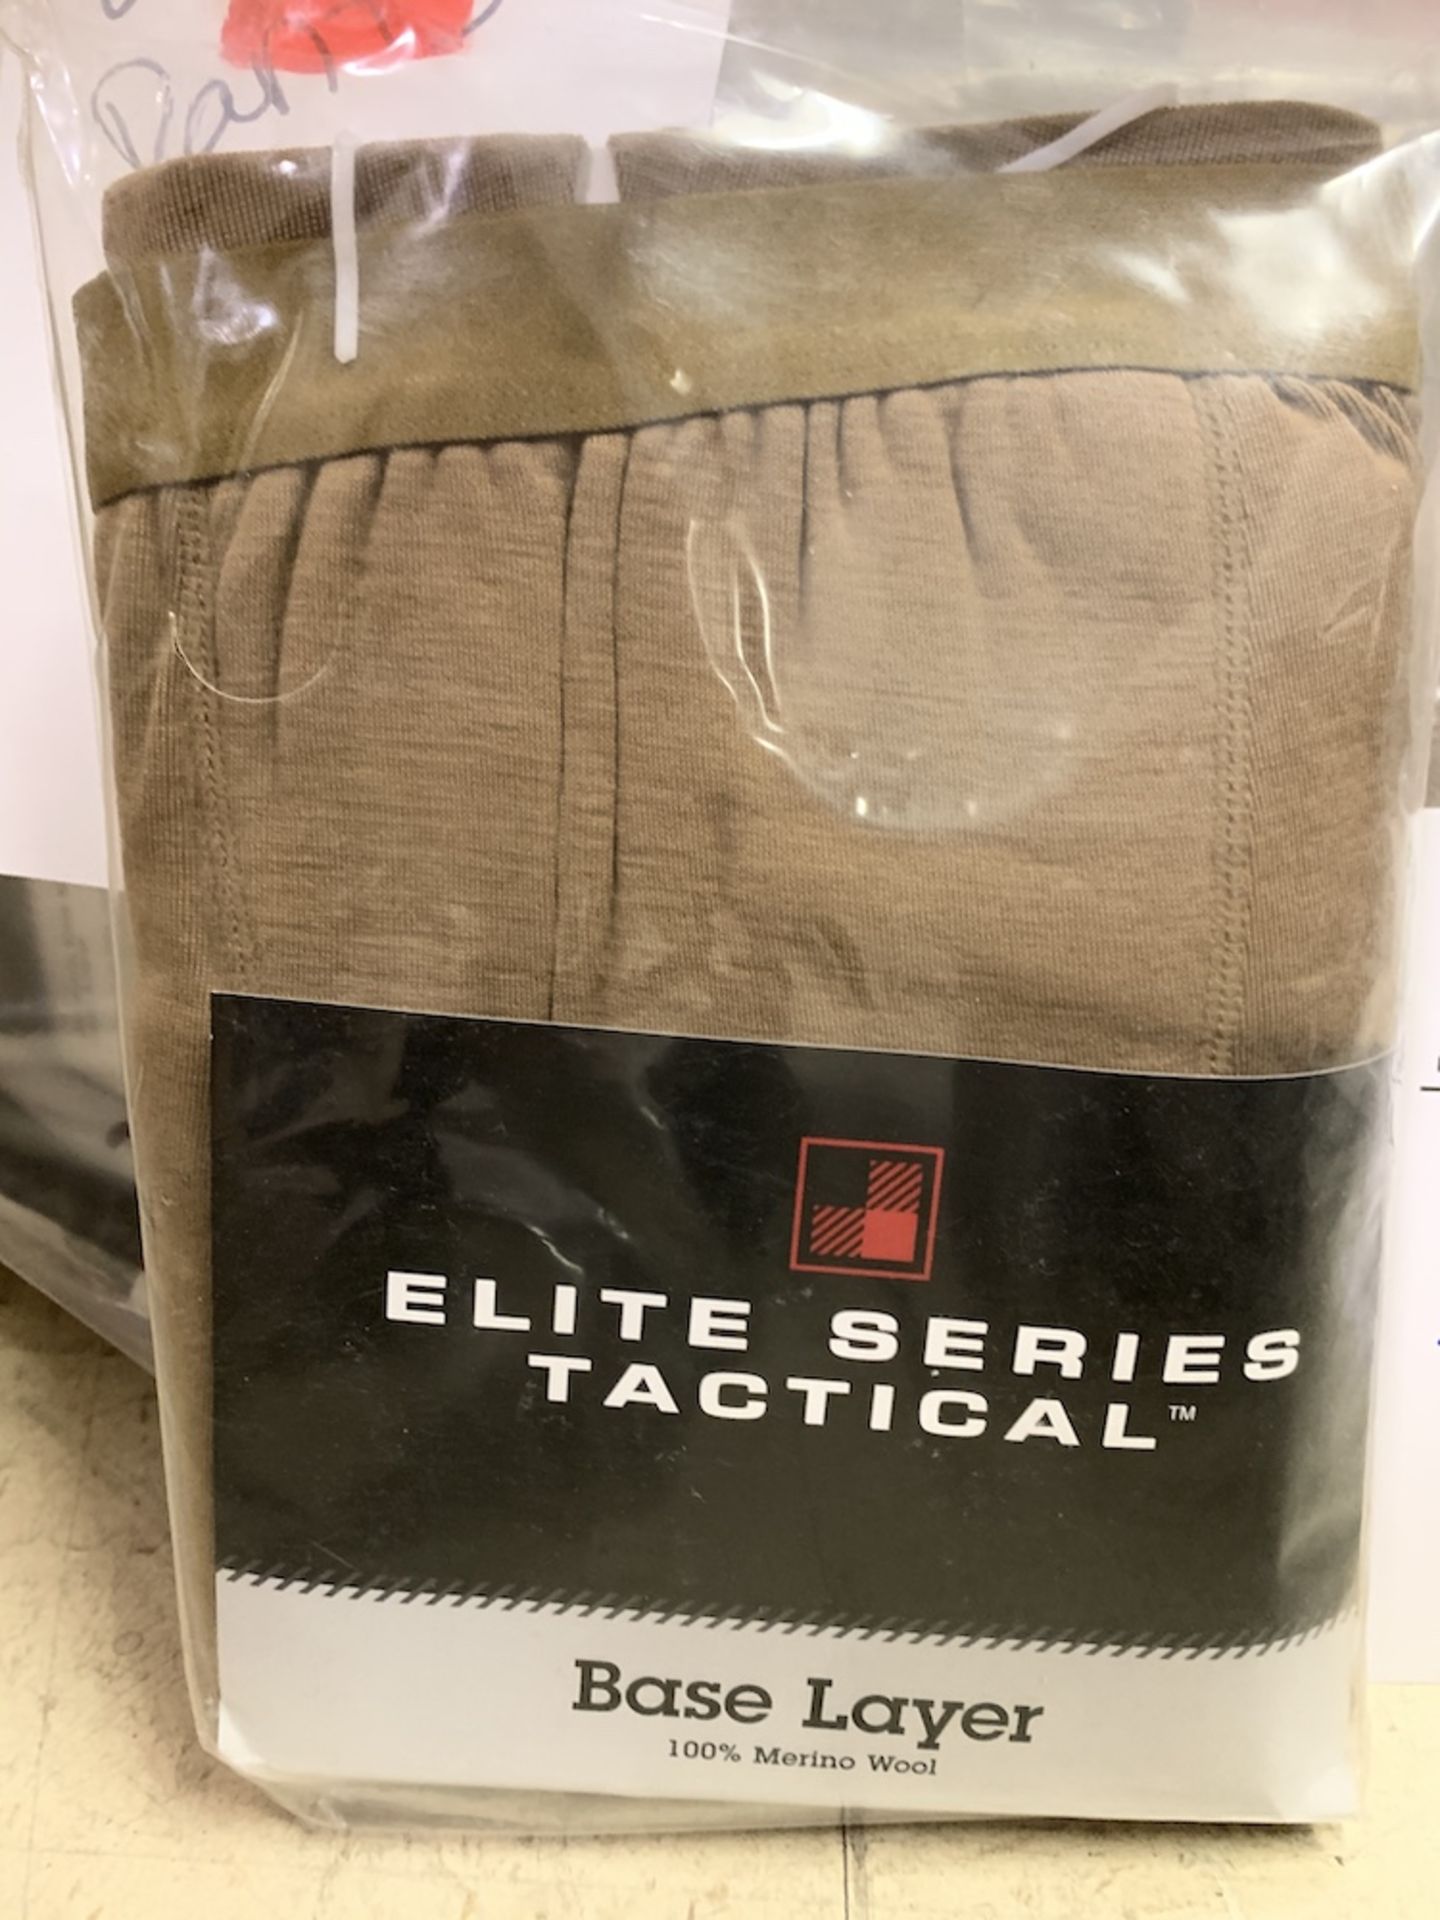 45 Pairs of Elite Series Tactical Base Layer Pants, New in Pack, Brown, Merino Wool, Retail $1,125+ - Image 3 of 4